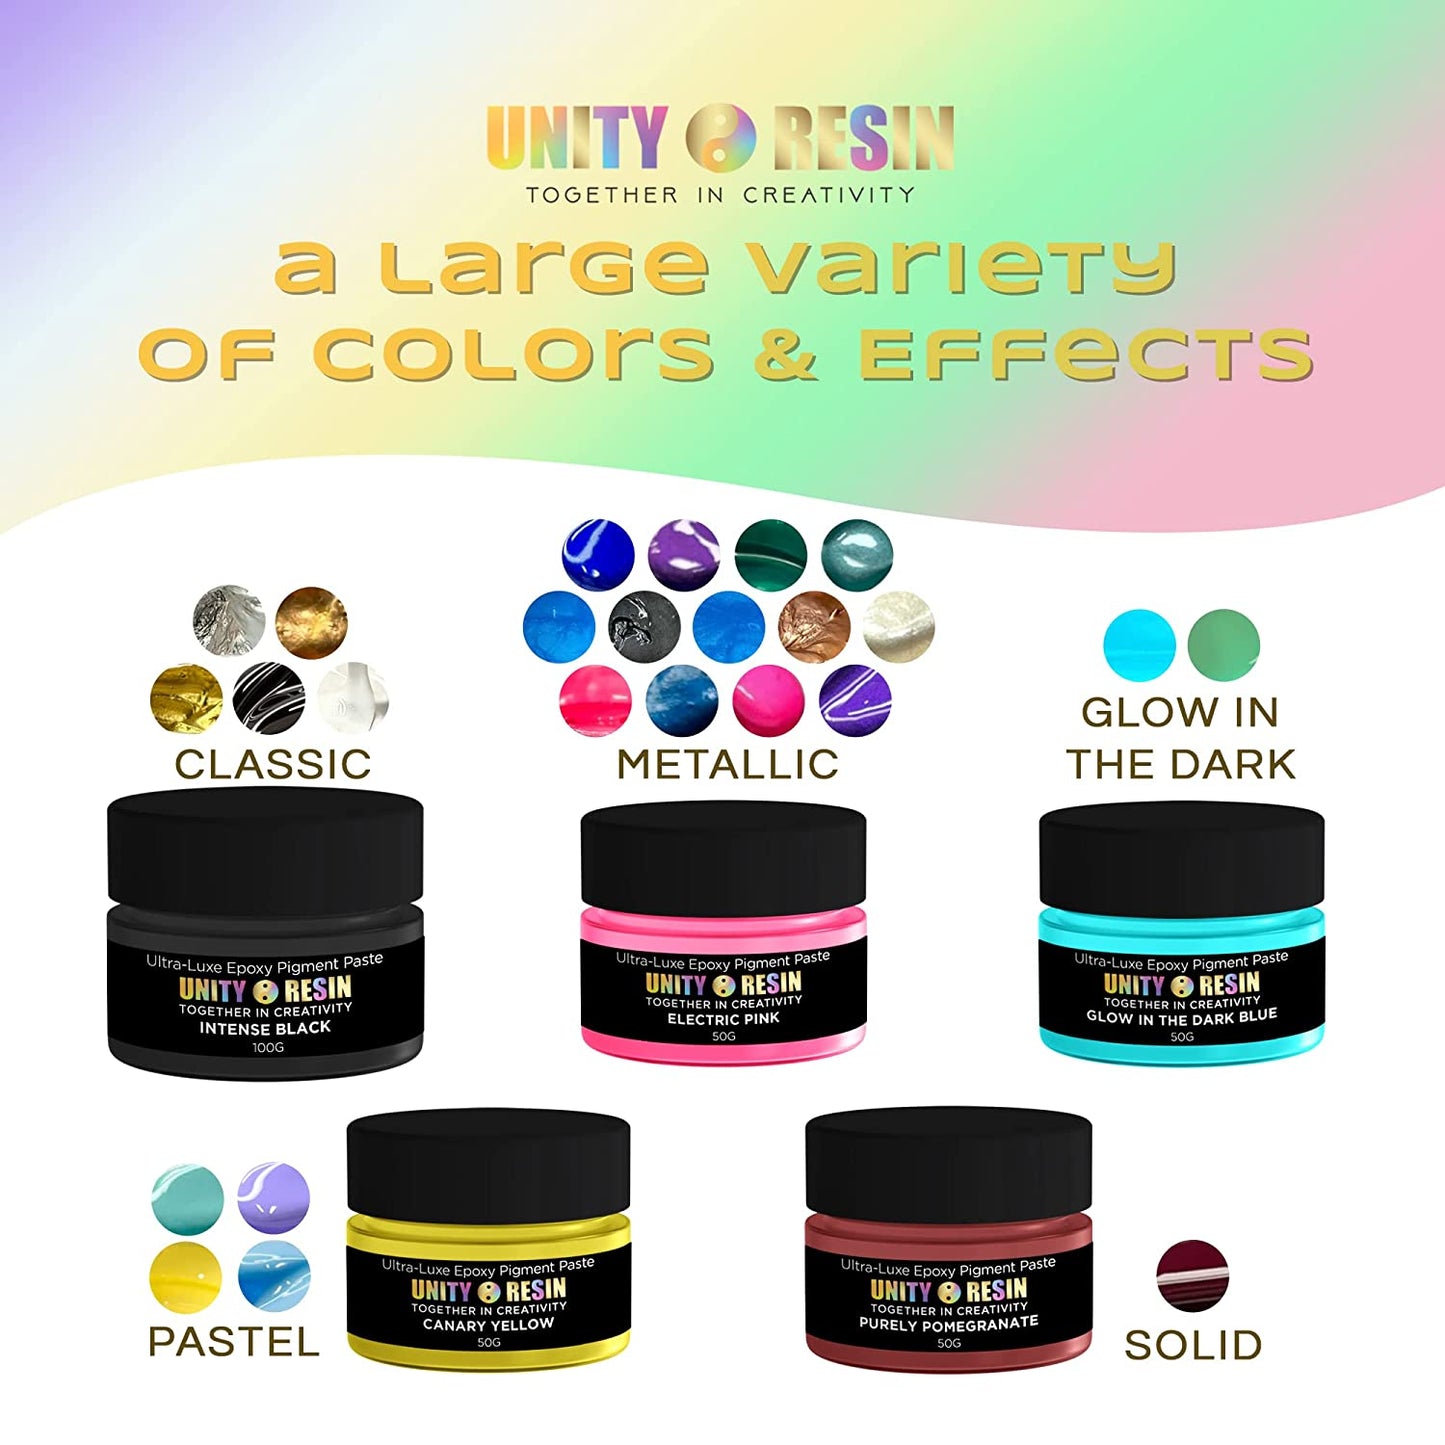 Ultra-Luxe Epoxy Resin Pigment Paste- MAJESTIC MAGENTA (50G).